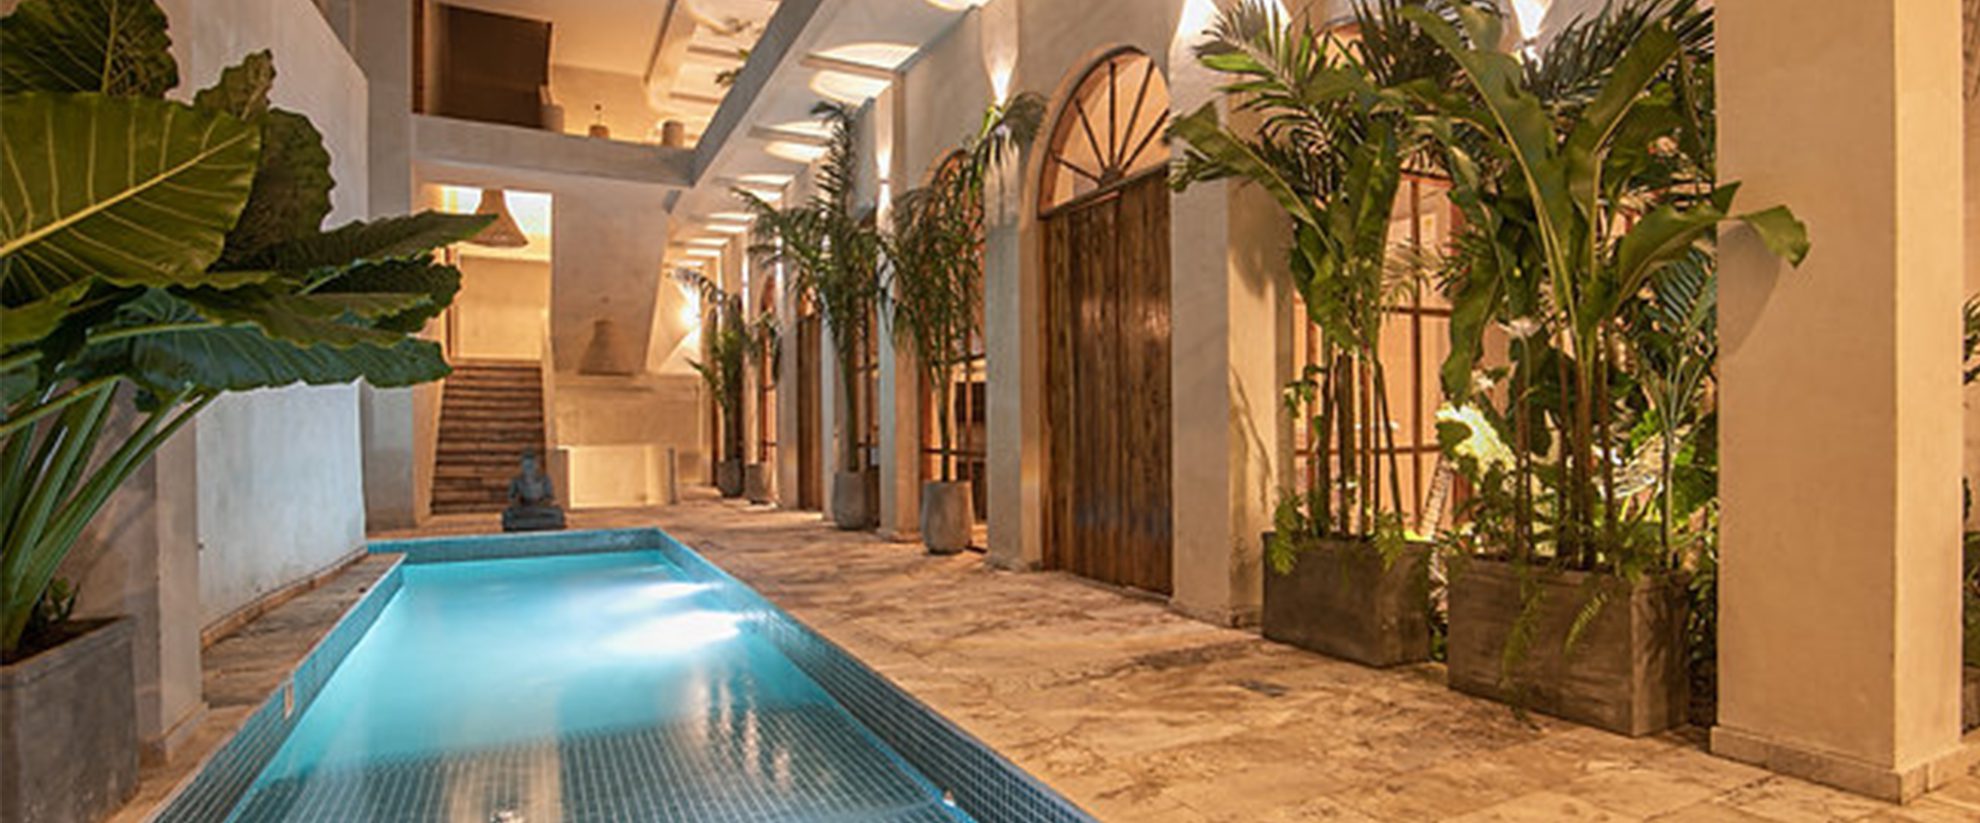 Bali Luxury House - Classy Cartagena